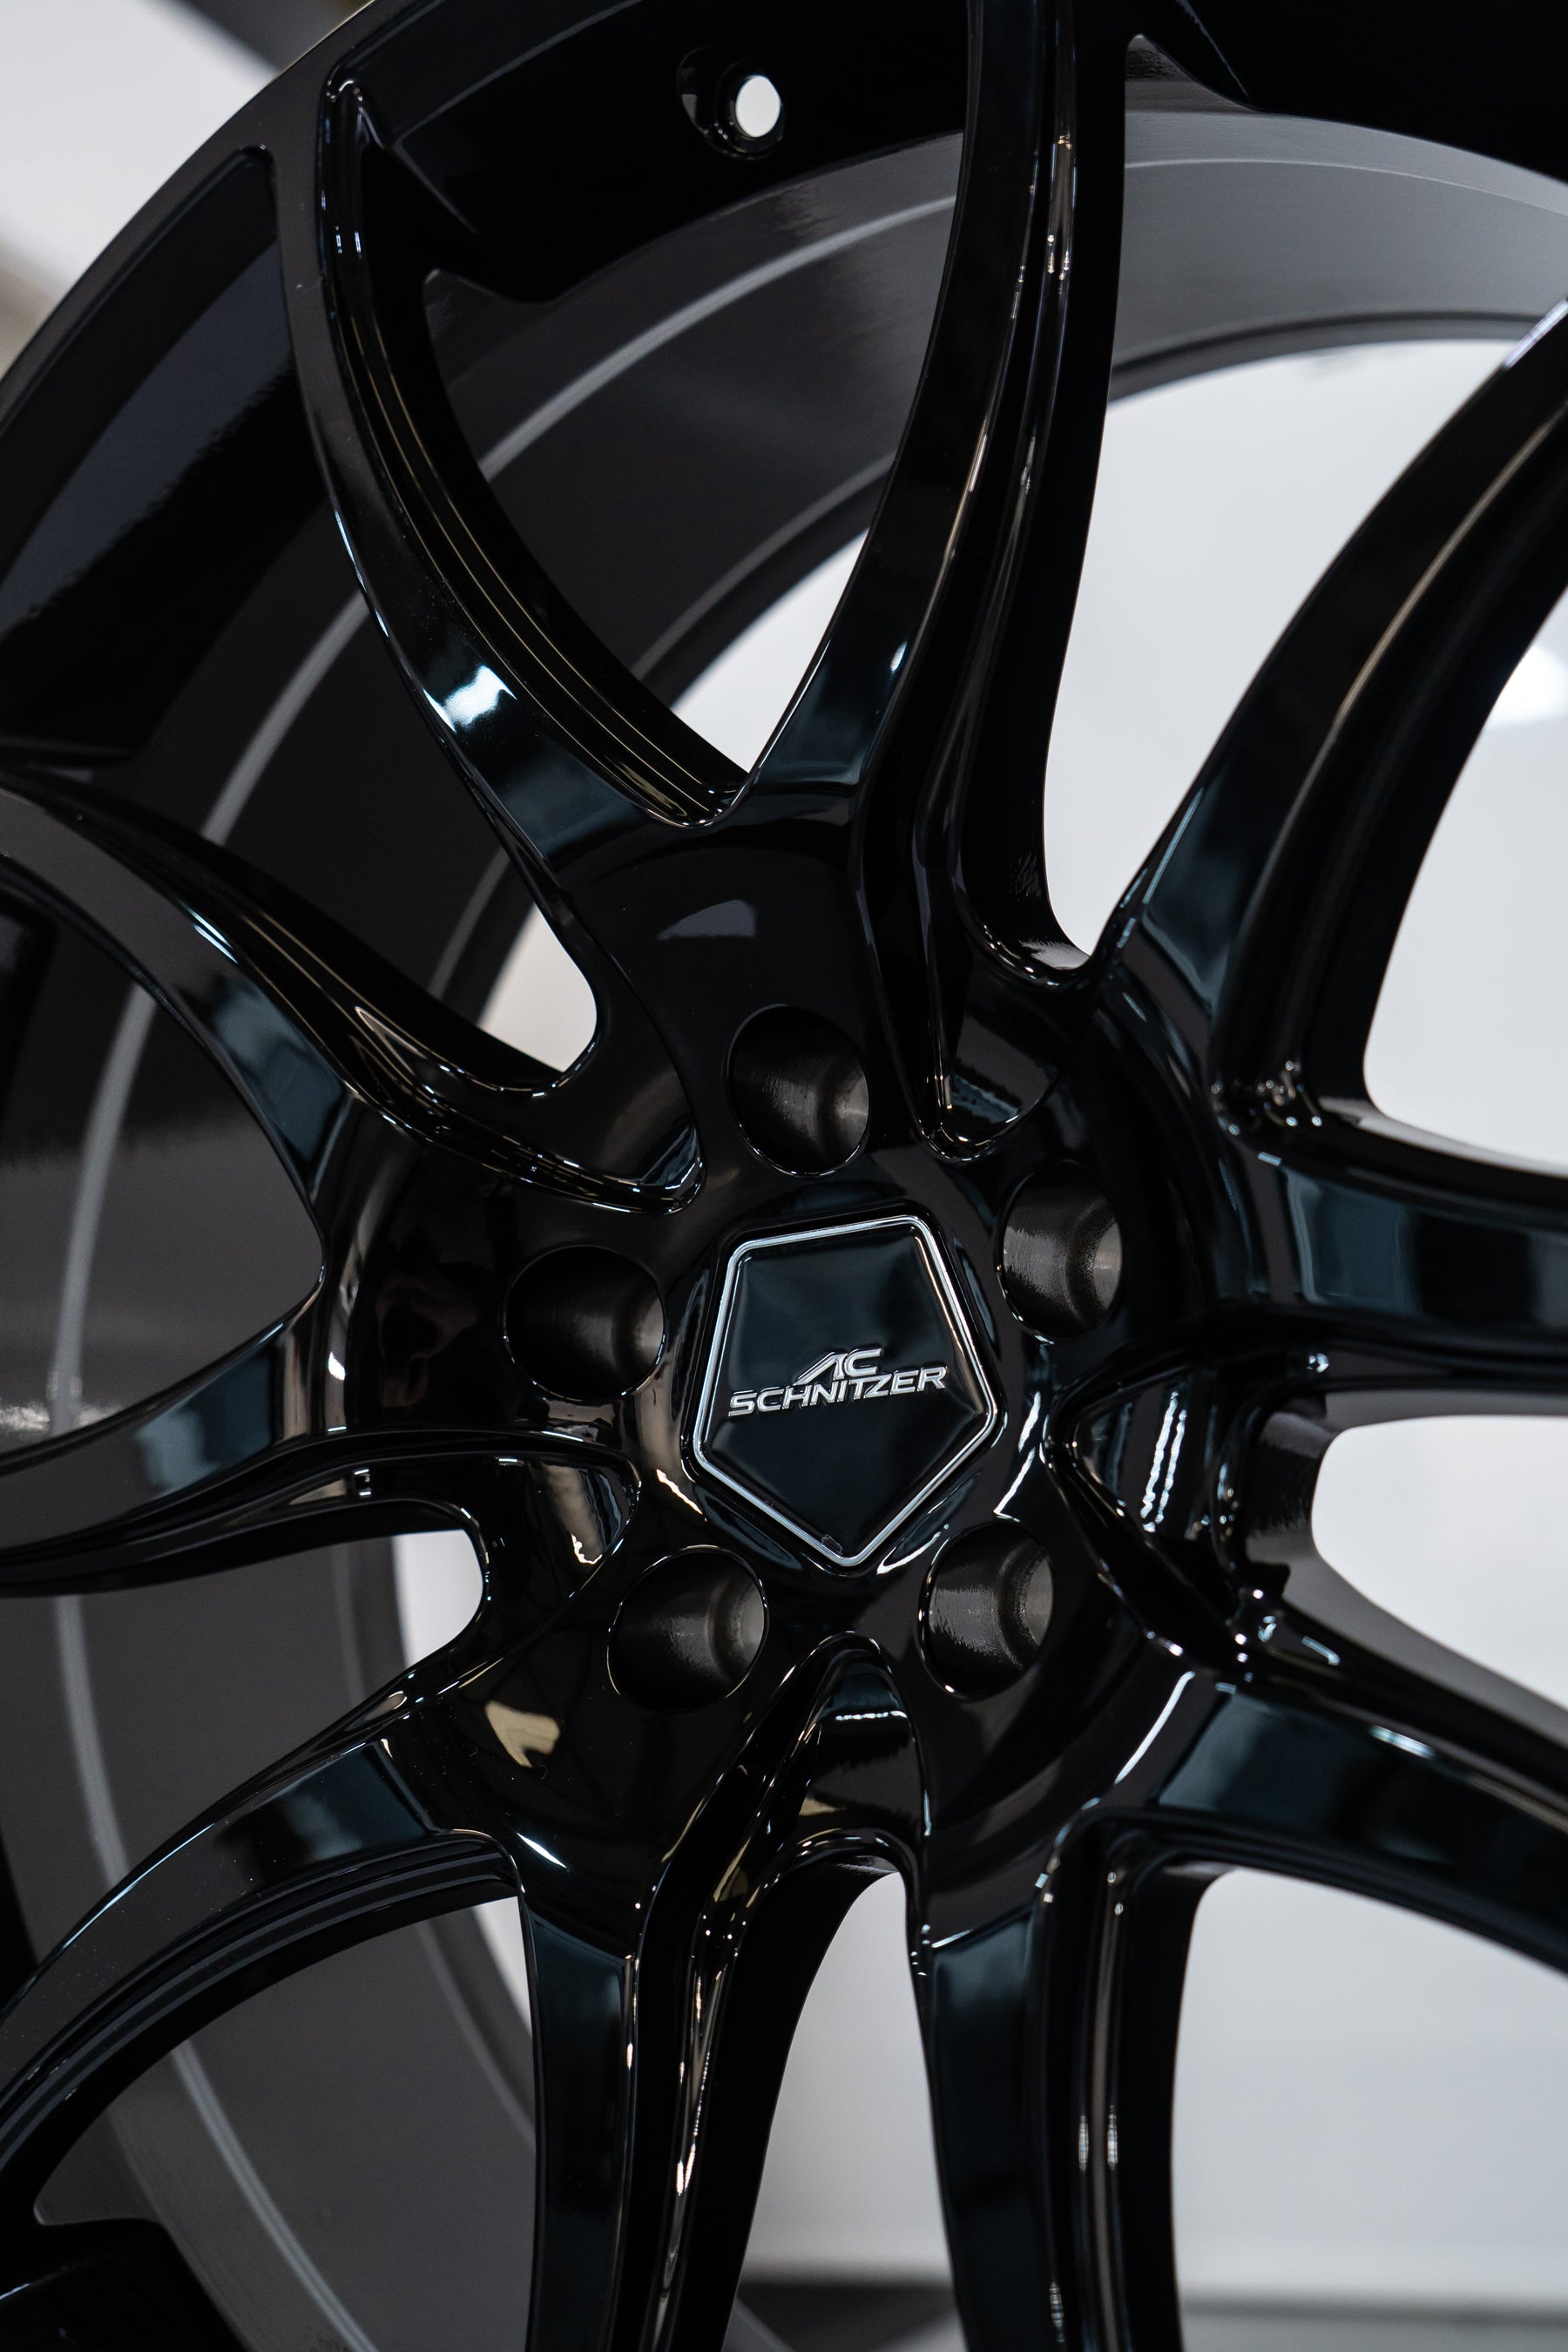 BMW X3/X4 AC2 22" Gloss Black Alloy Wheel Sets